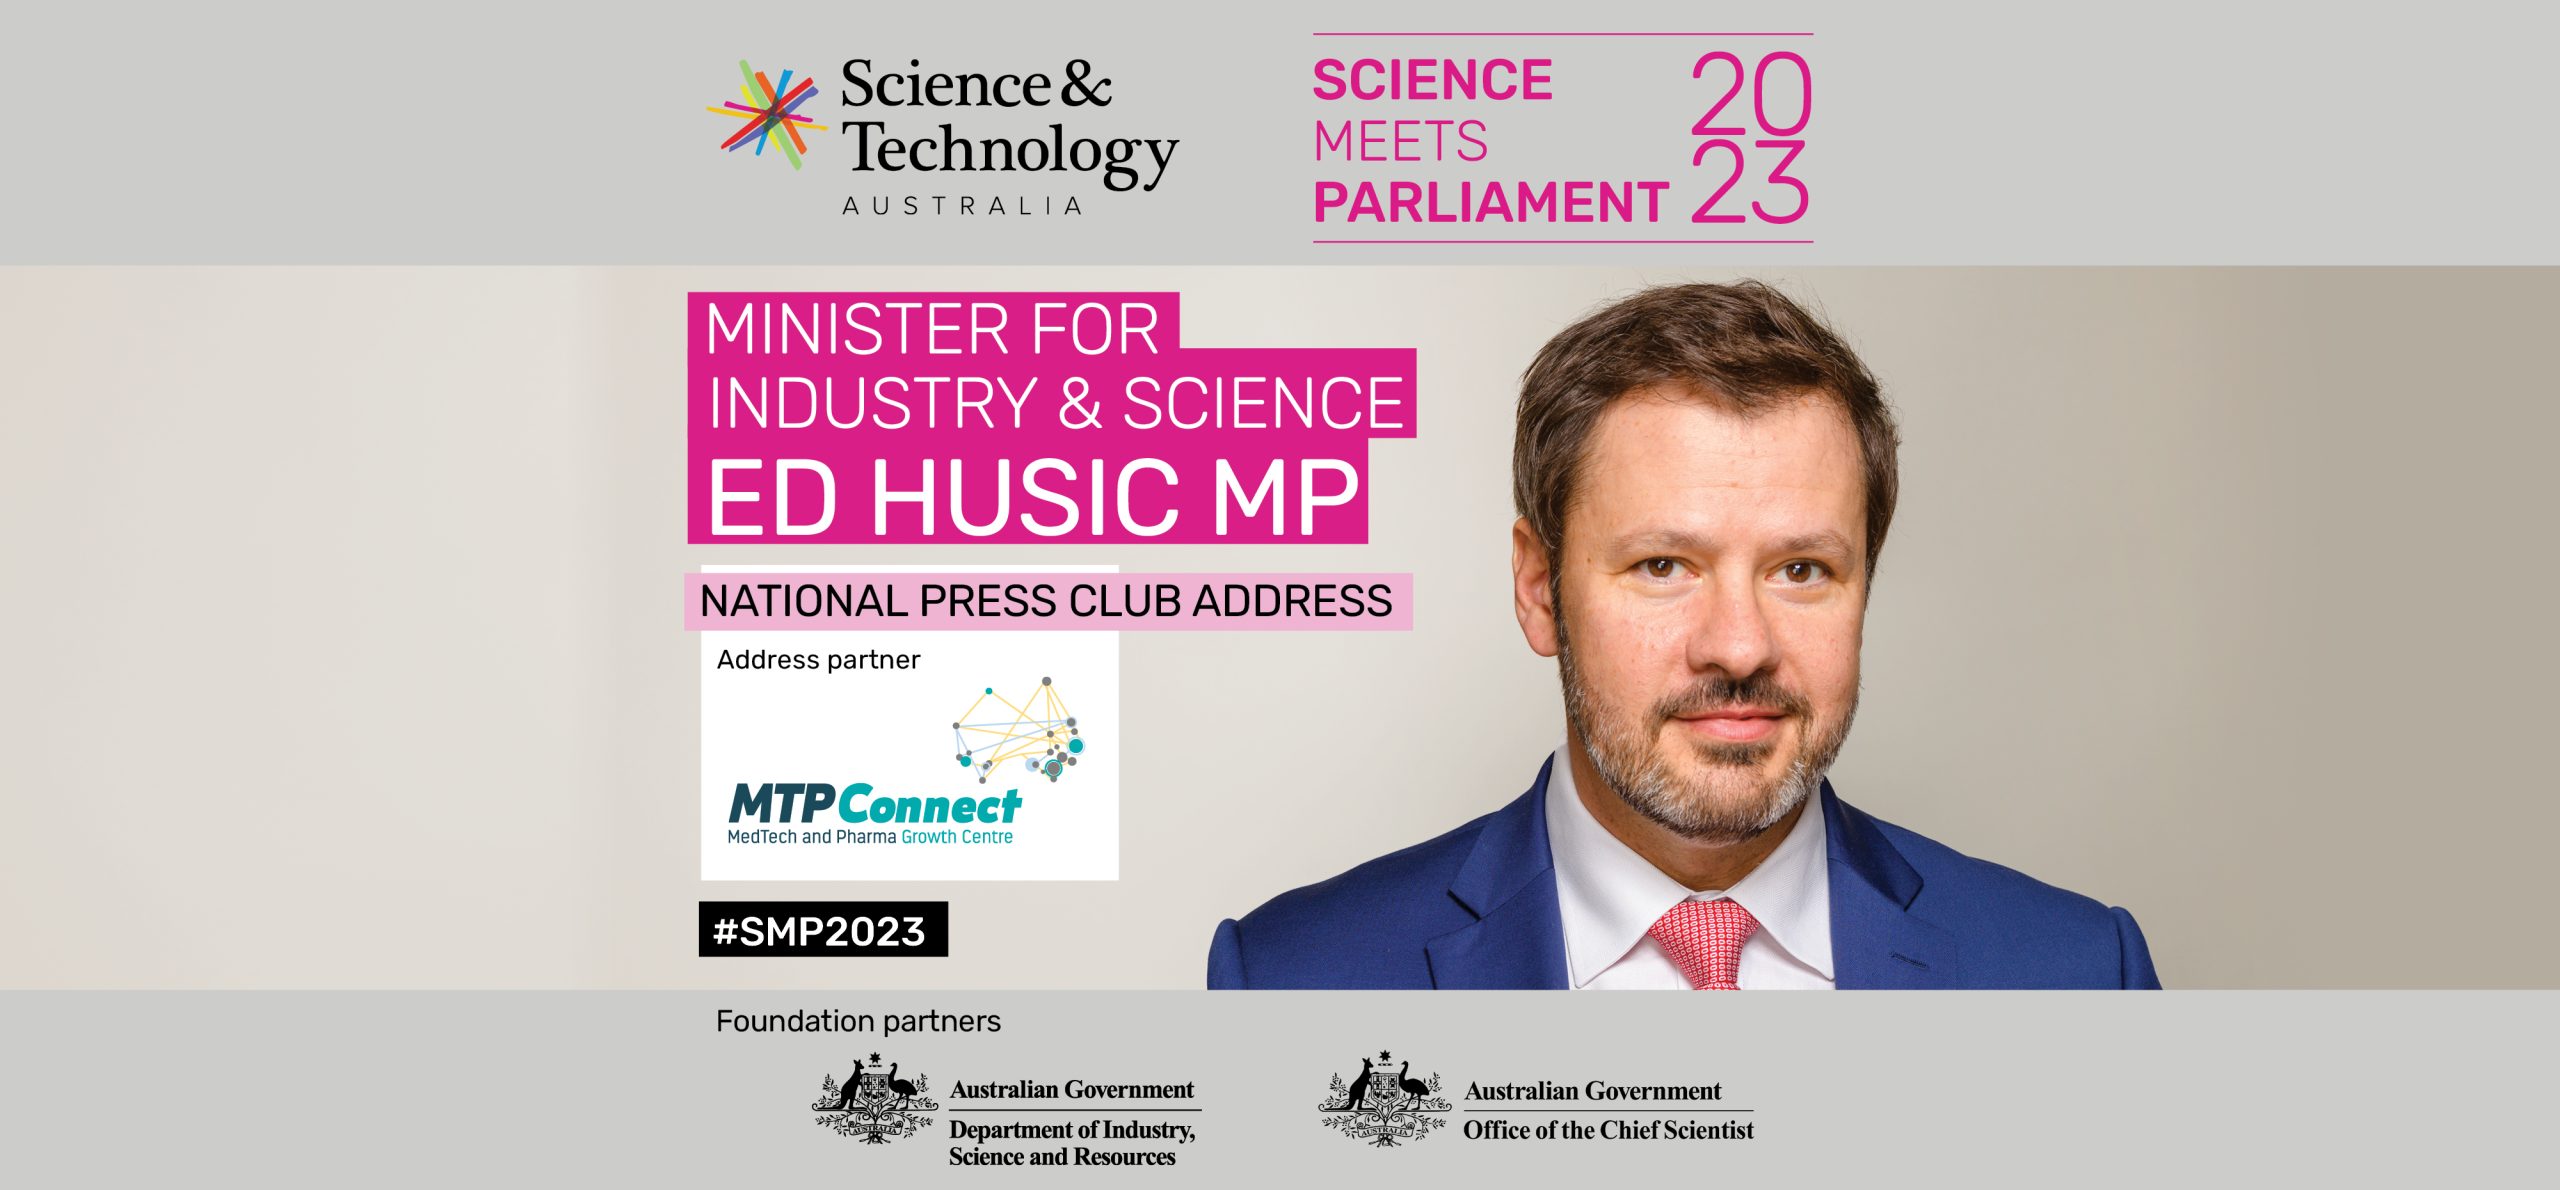 Ed Husic MP National Press Club Address SMP 2023